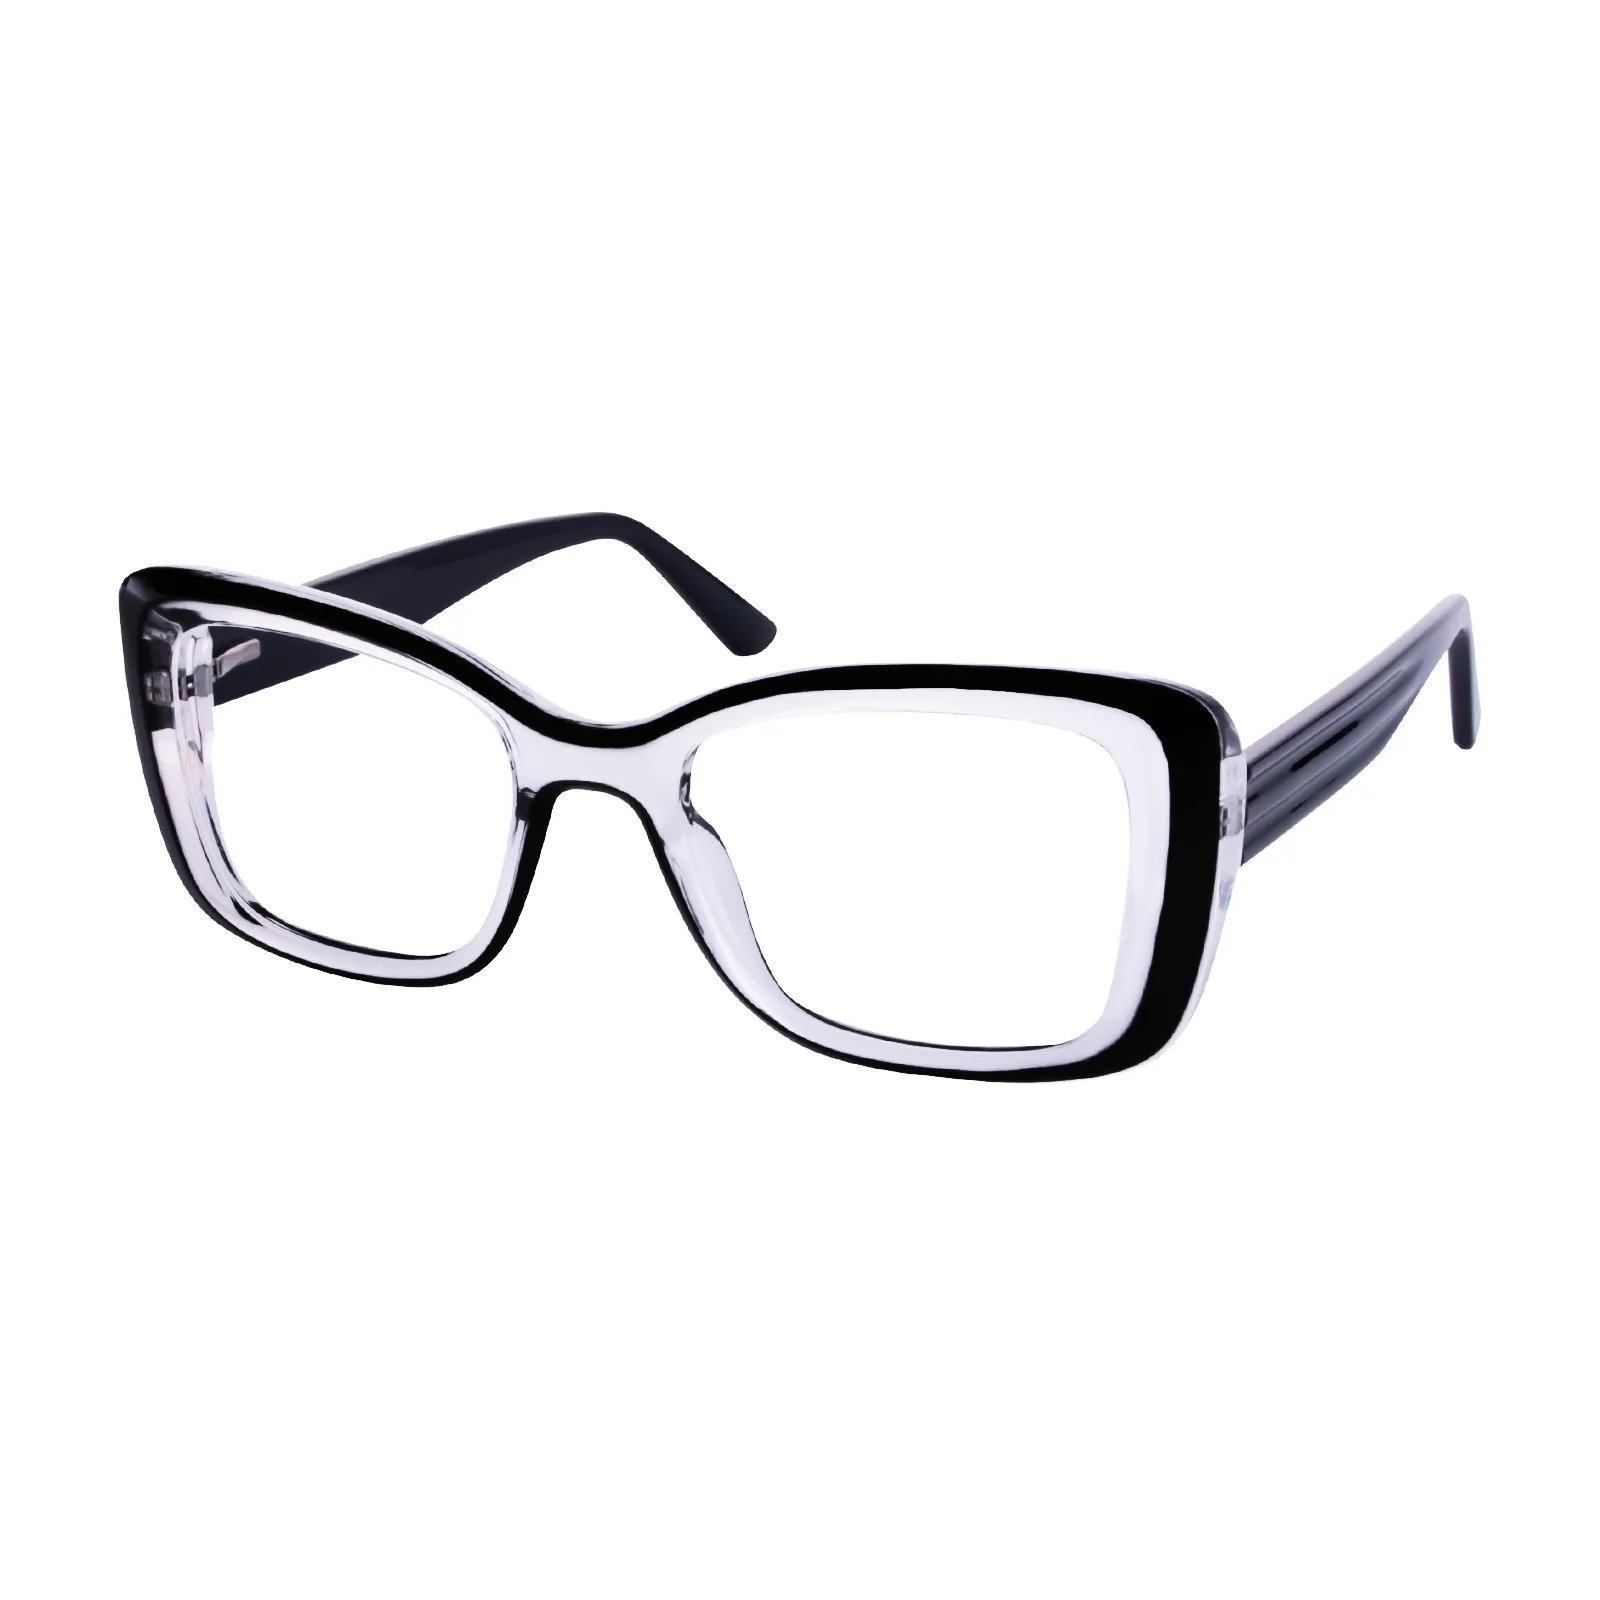 Maggie - Square Black Glasses for Women